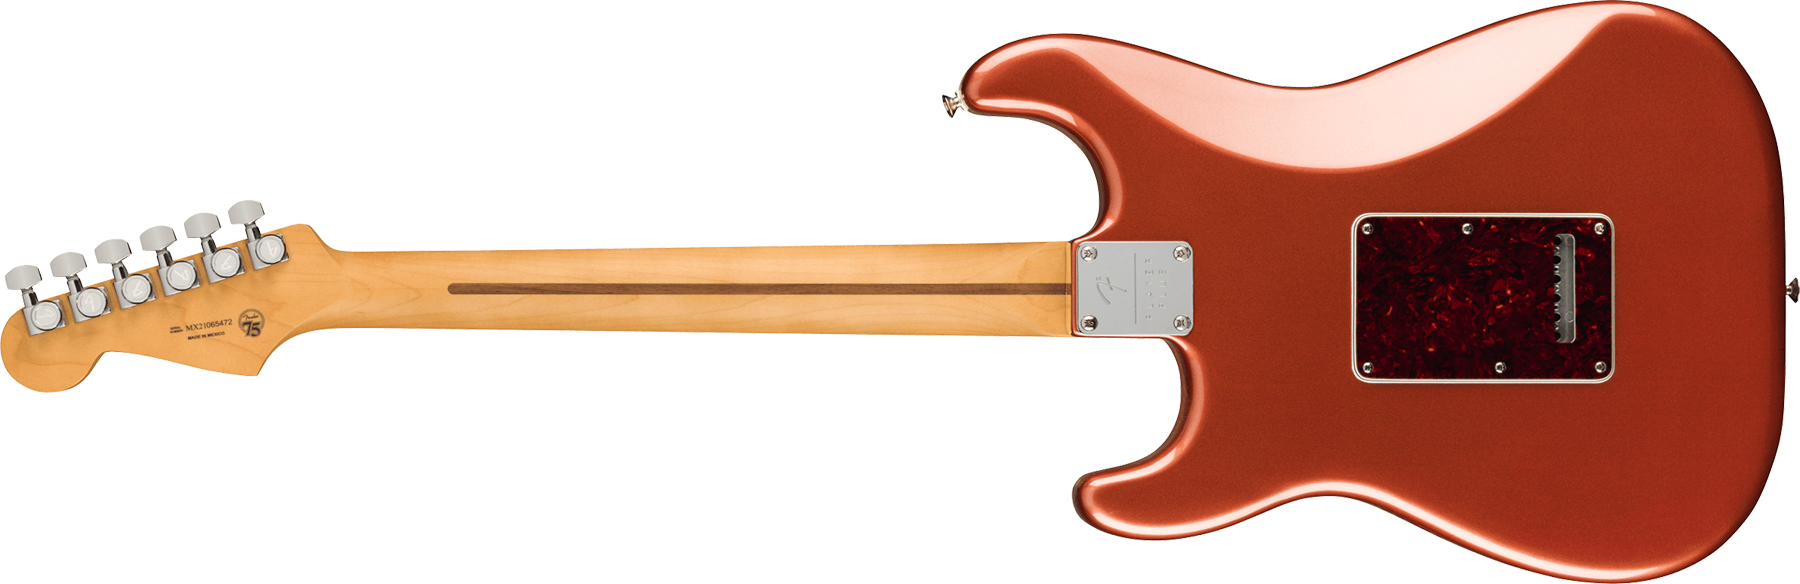 Fender Strat Player Plus Mex 3s Trem Pf - Aged Candy Apple Red - E-Gitarre in Str-Form - Variation 1